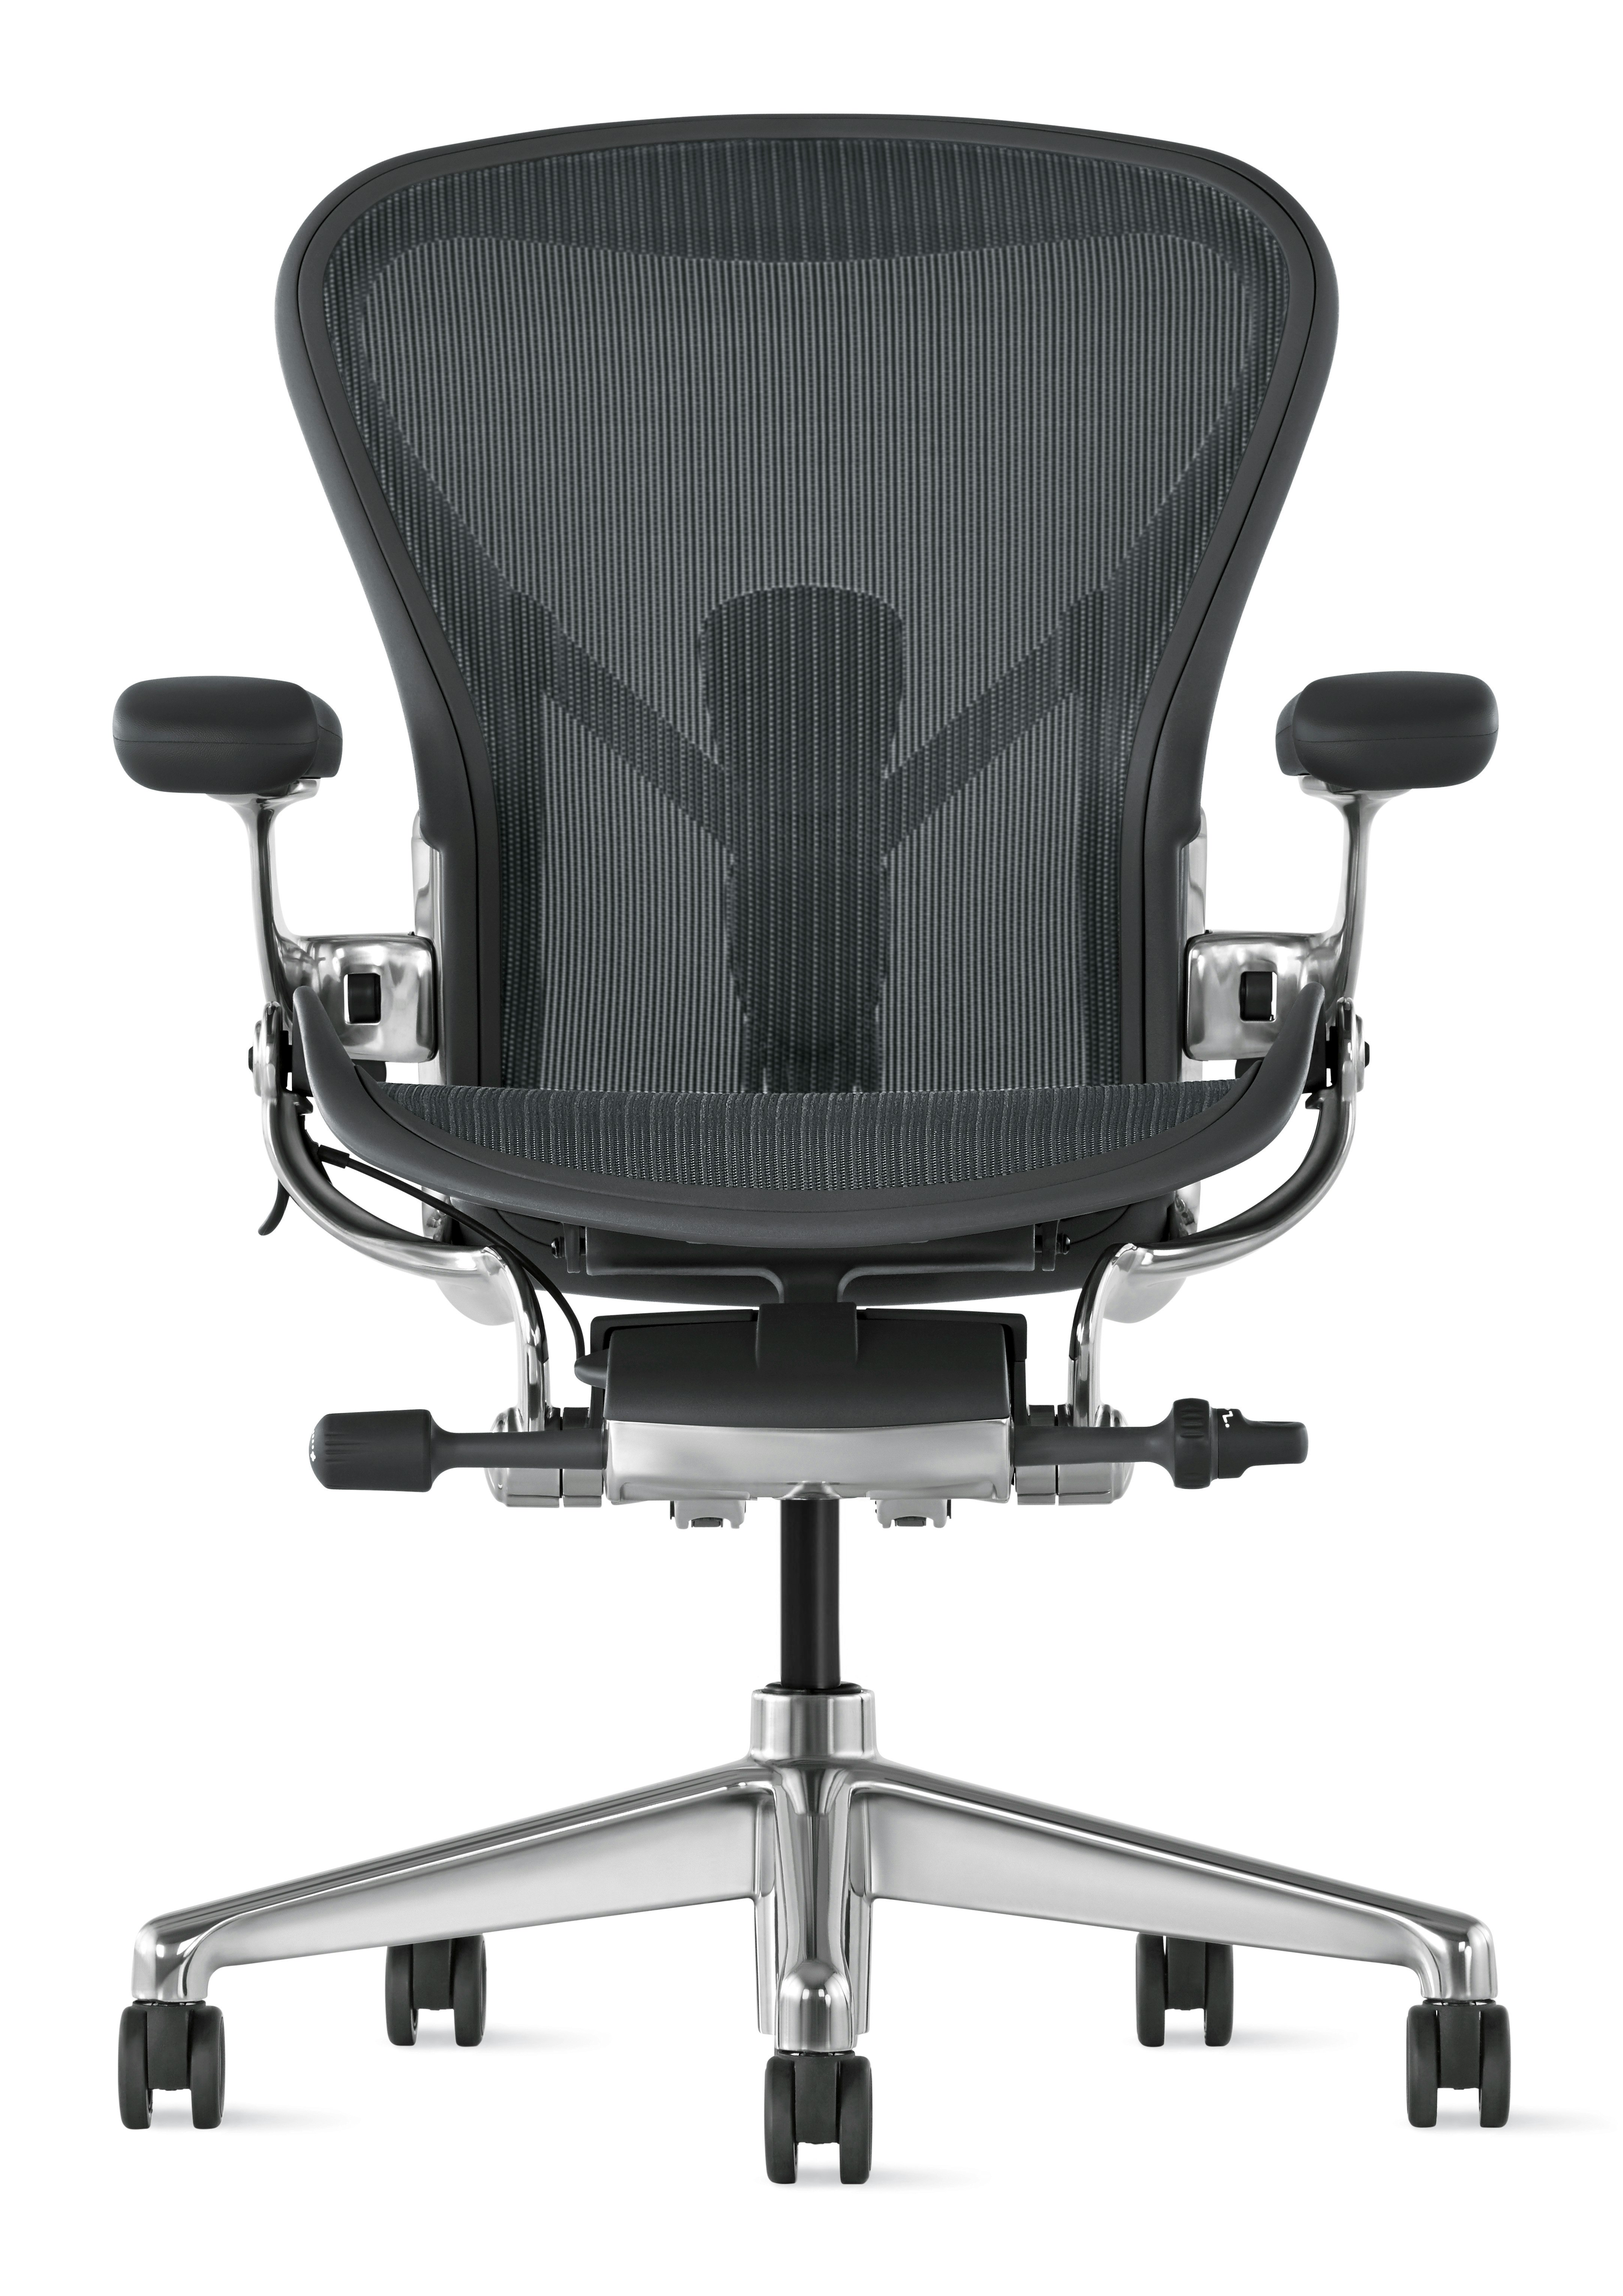 Details about   Herman Miller Aeron chair parts,,,Recline Adjustment Knobs 